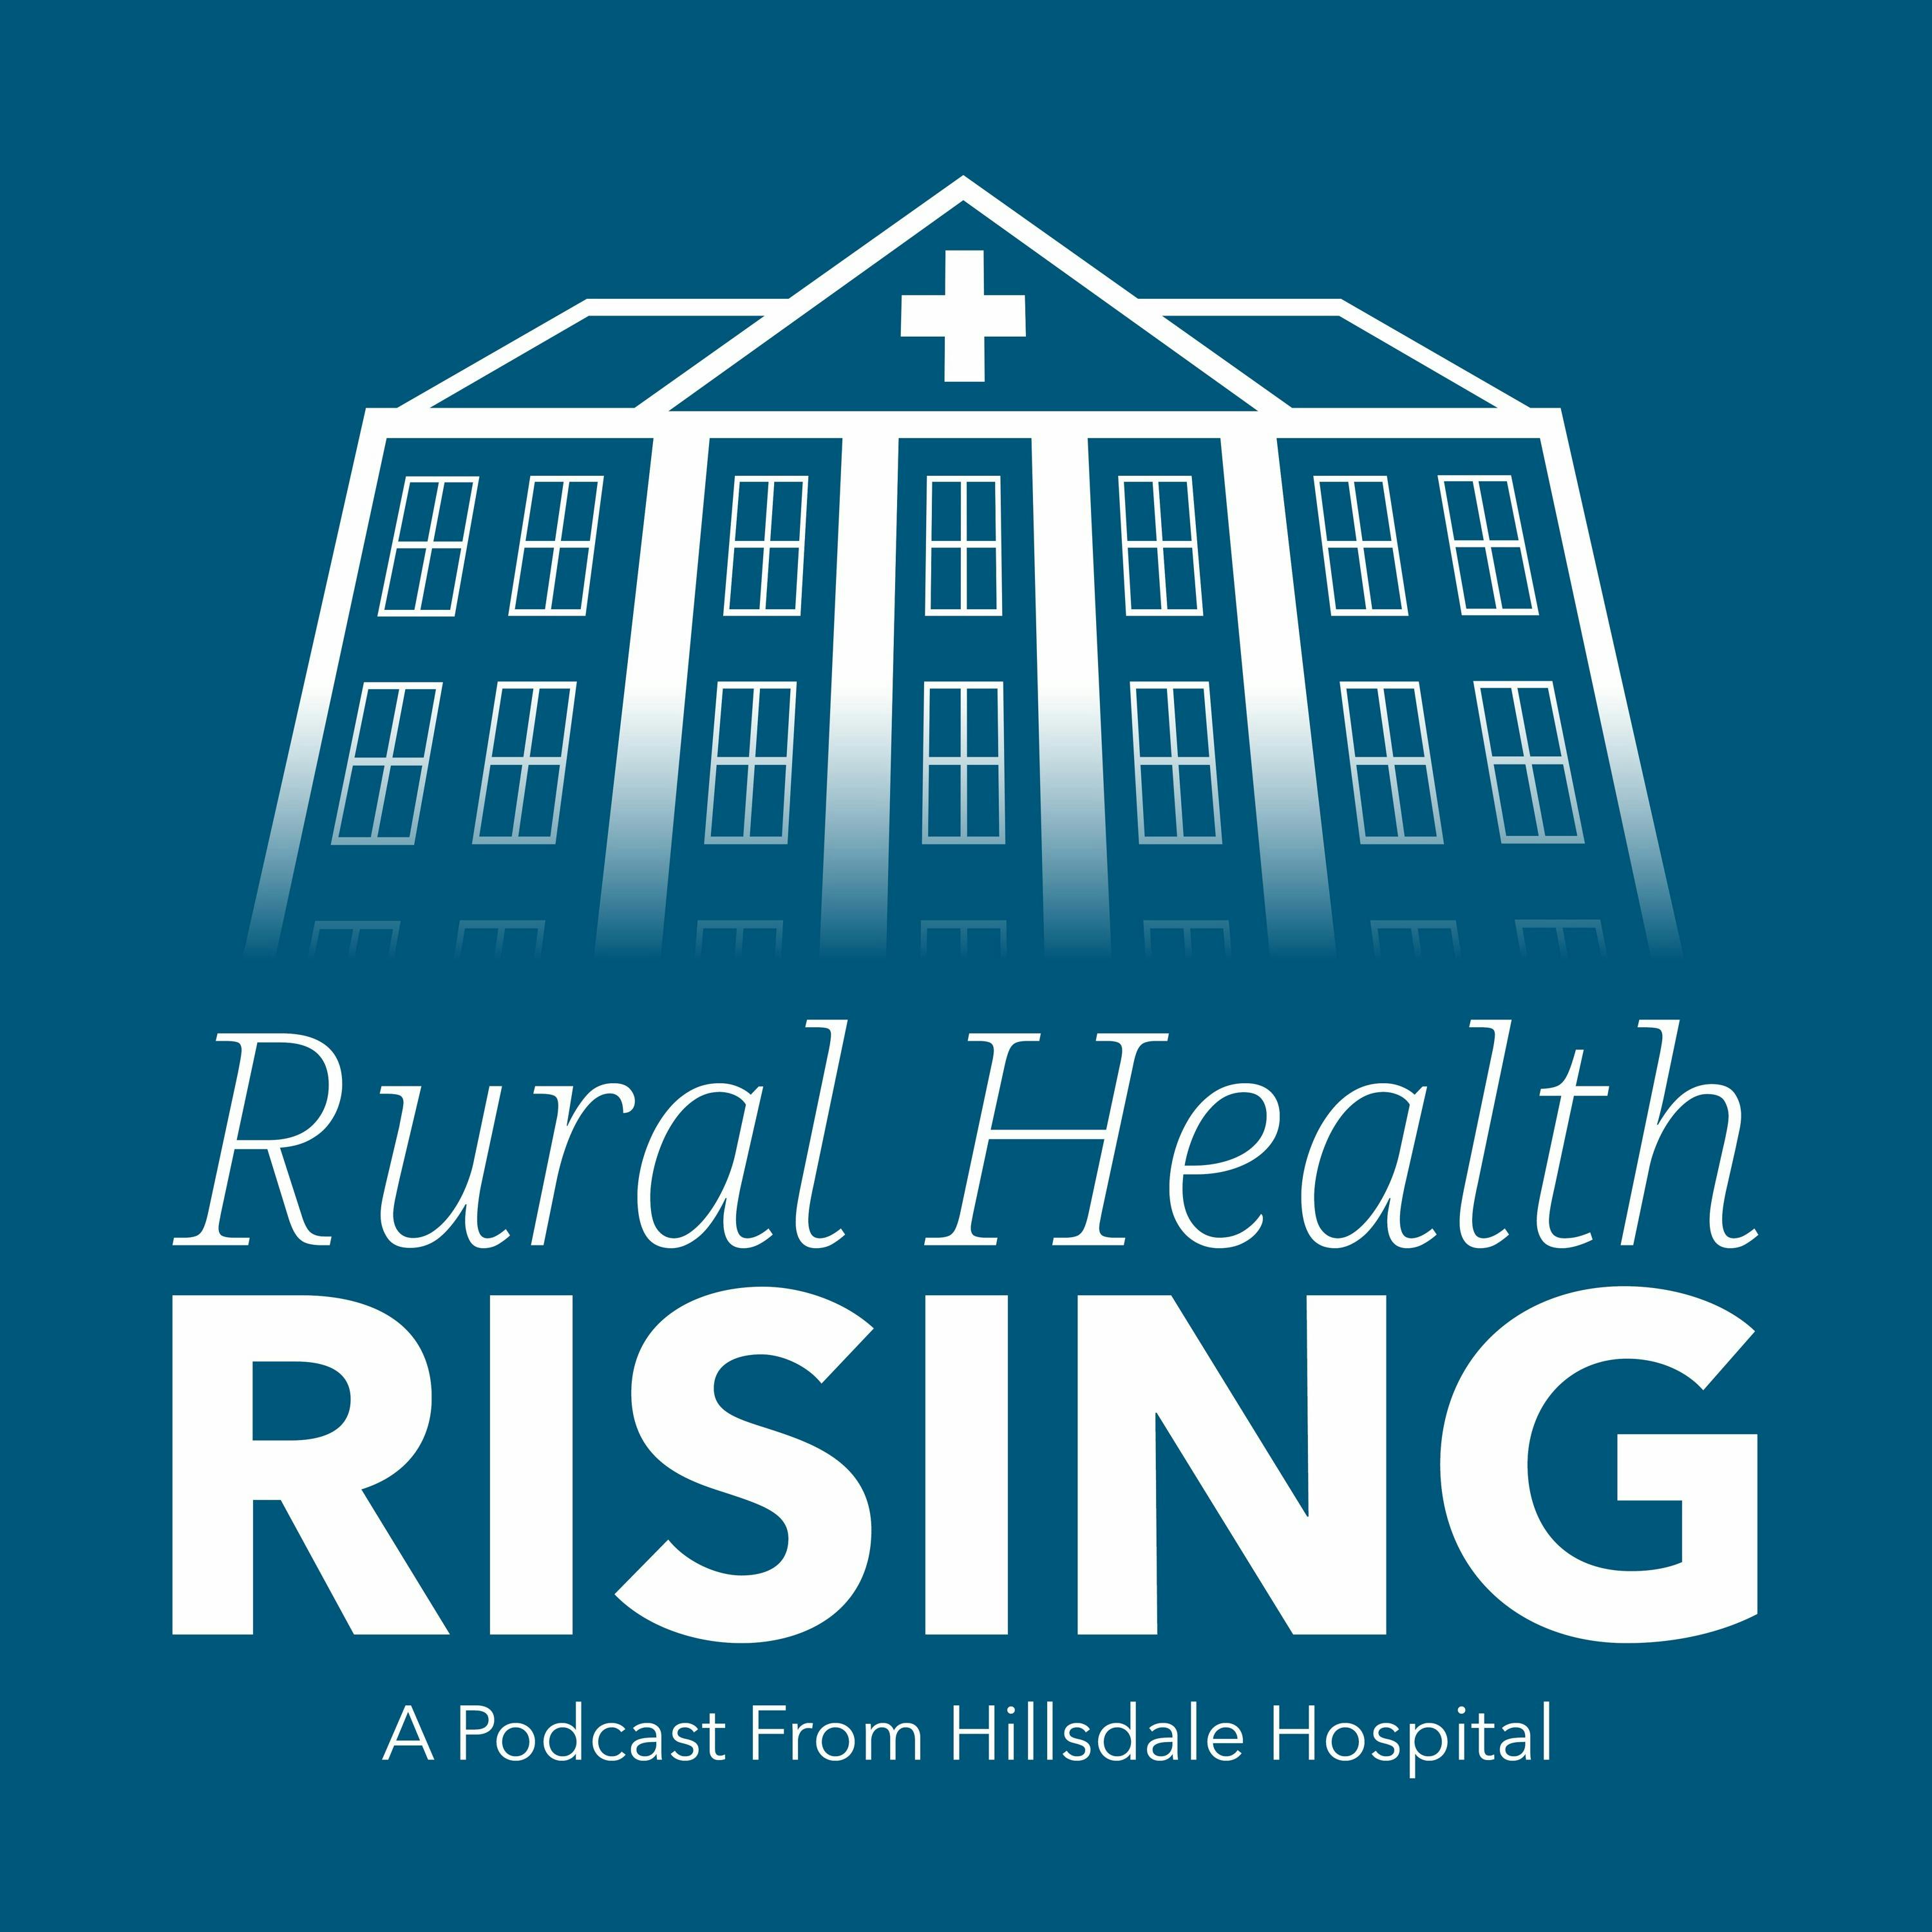 Episode 2: Critical Access Hospitals